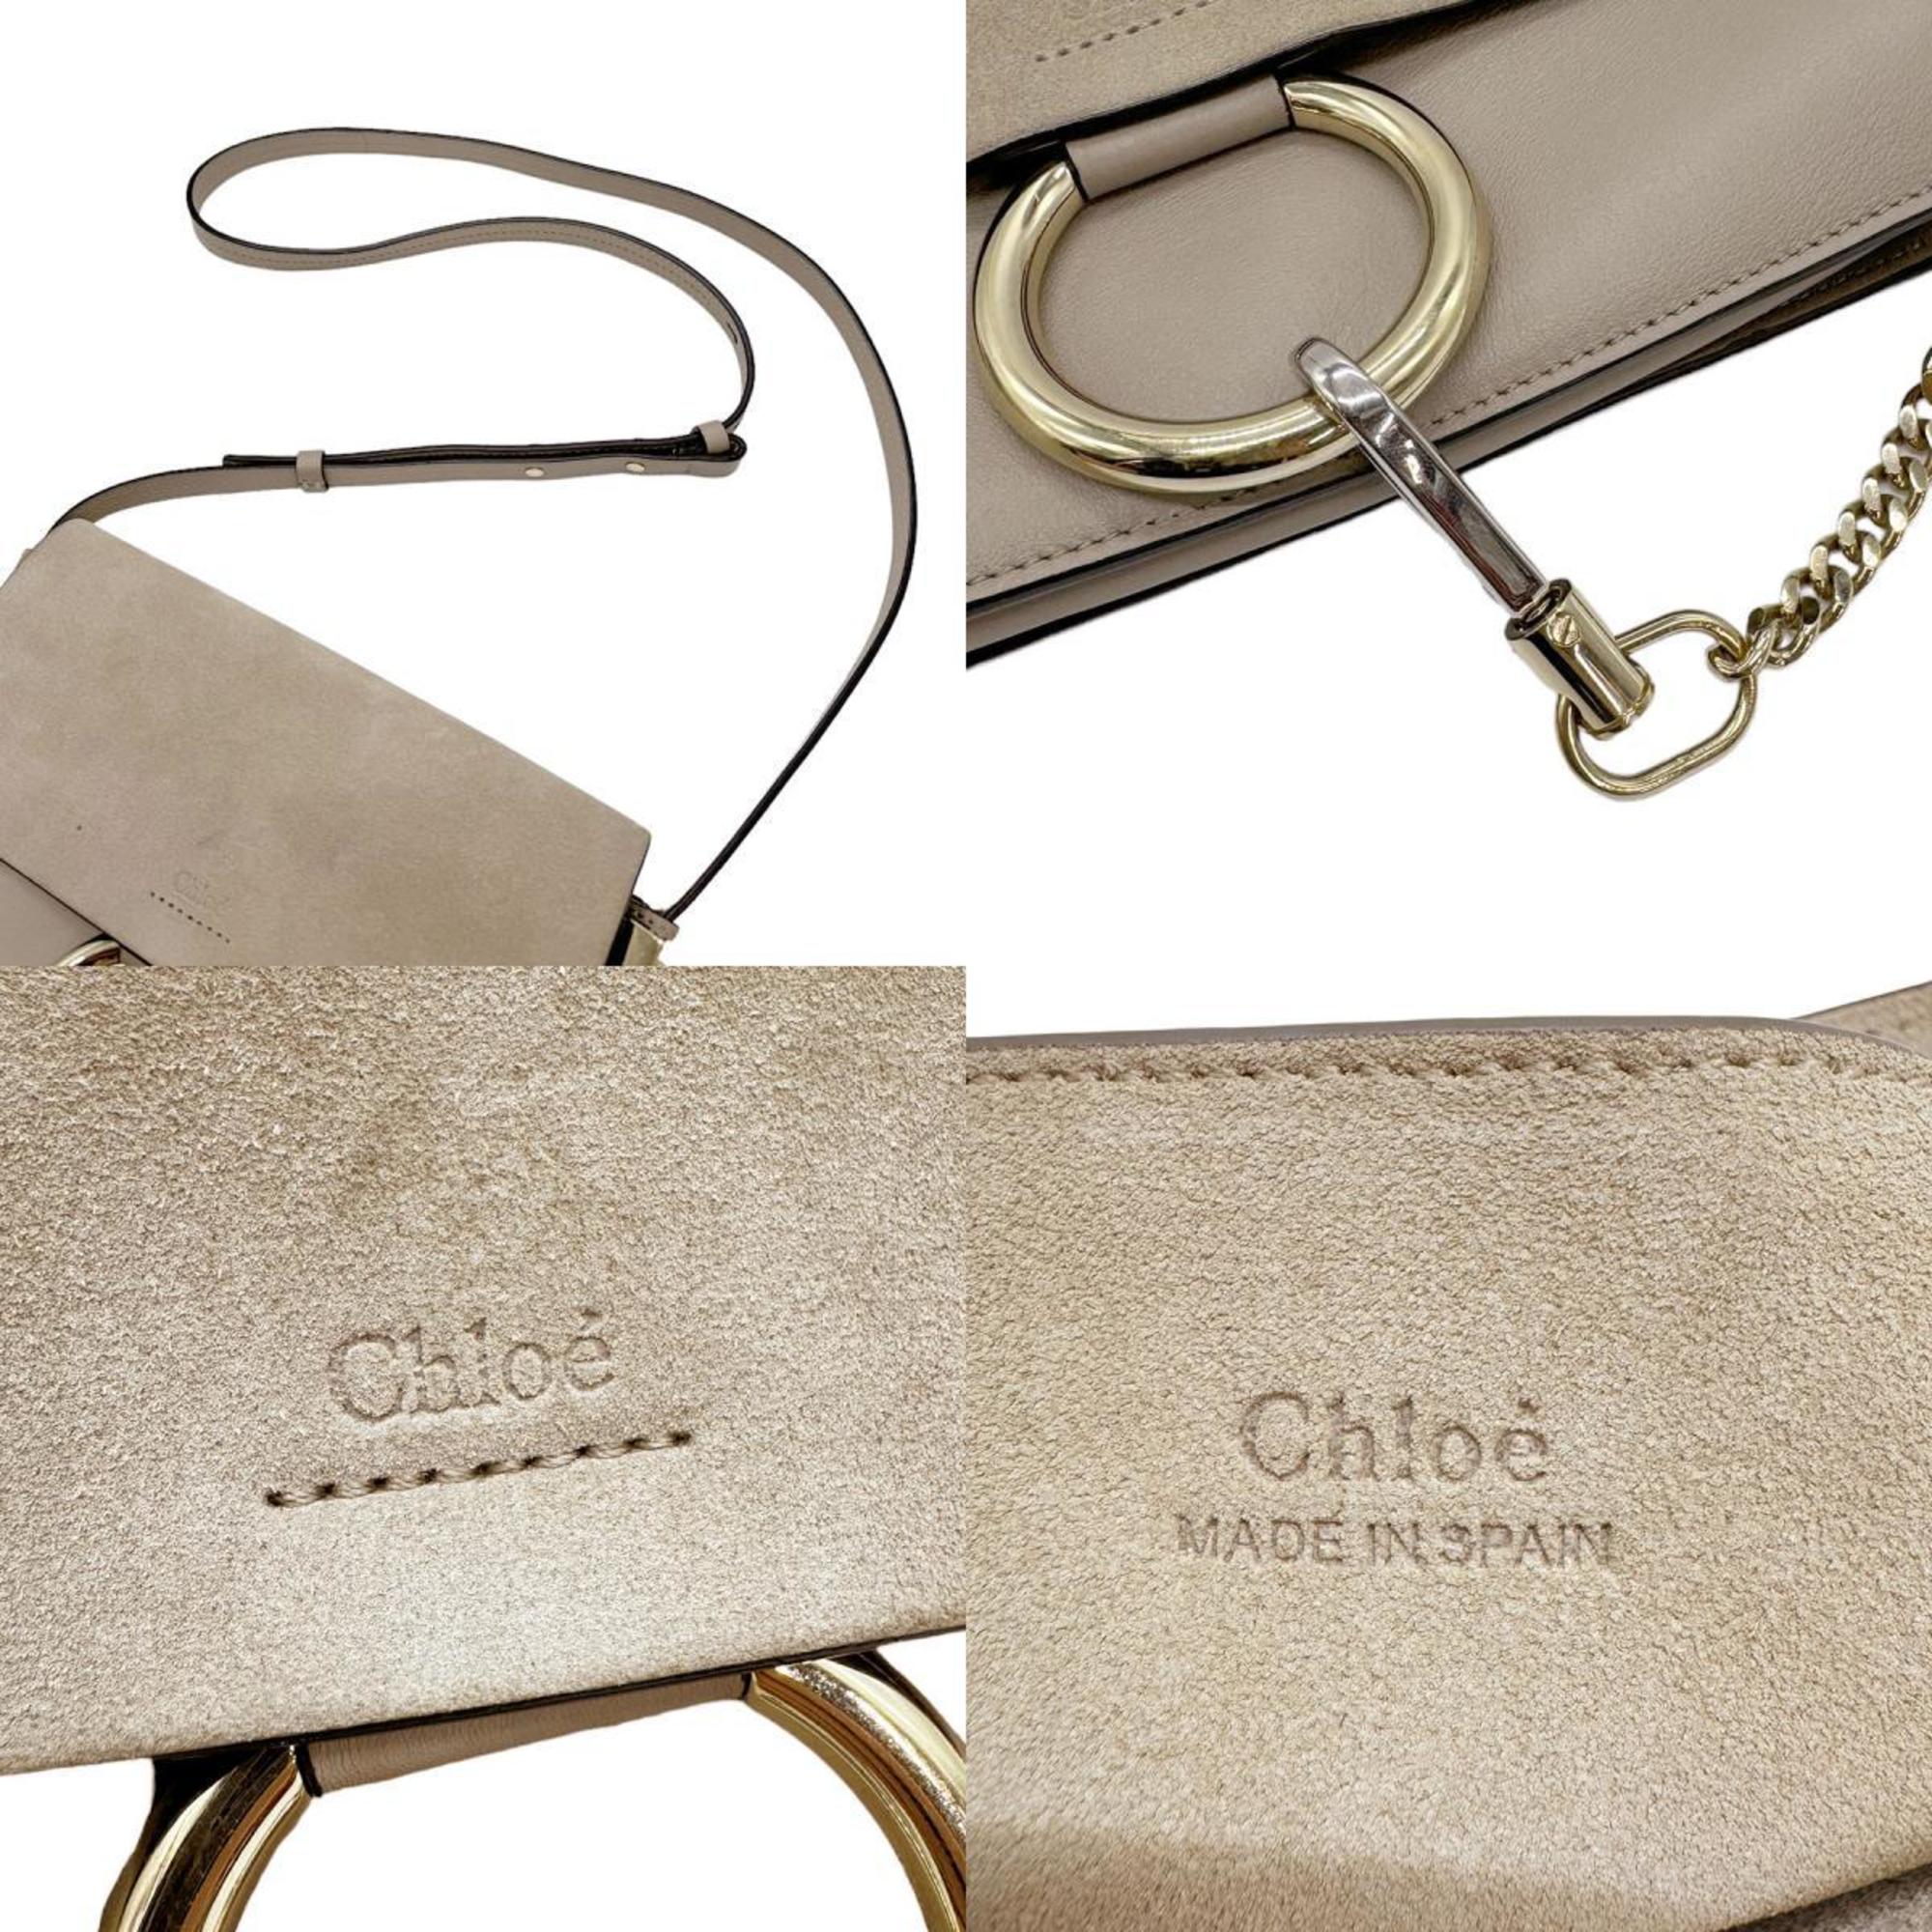 Chloé Chloe Shoulder Bag Suede/Leather Greige Women's z0659